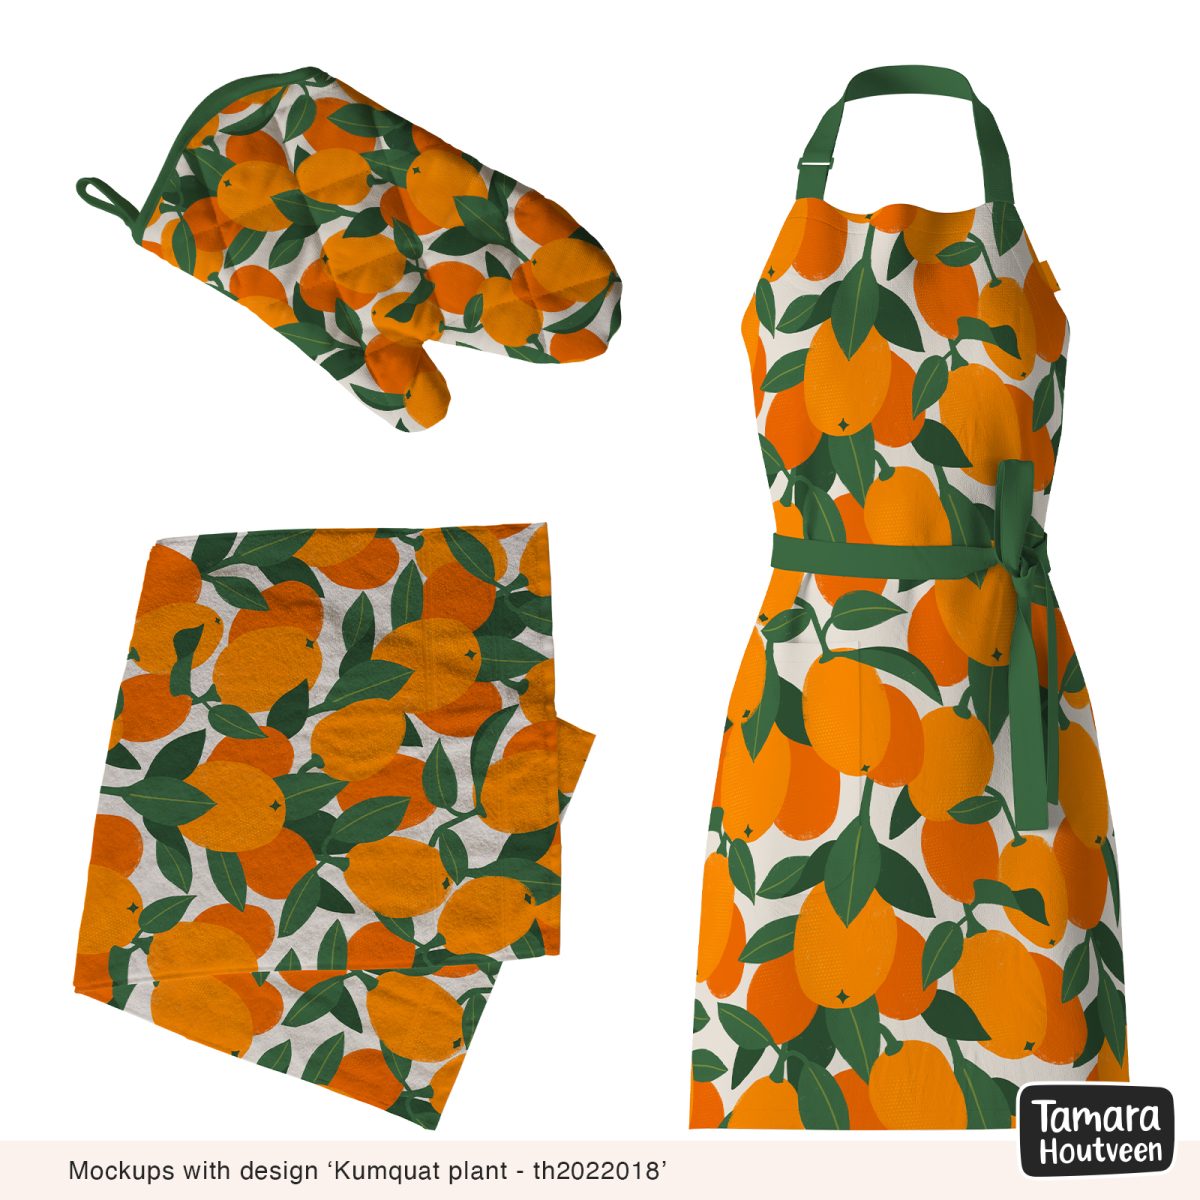 Mockups with kumquat surface pattern by Tamara Houtveen